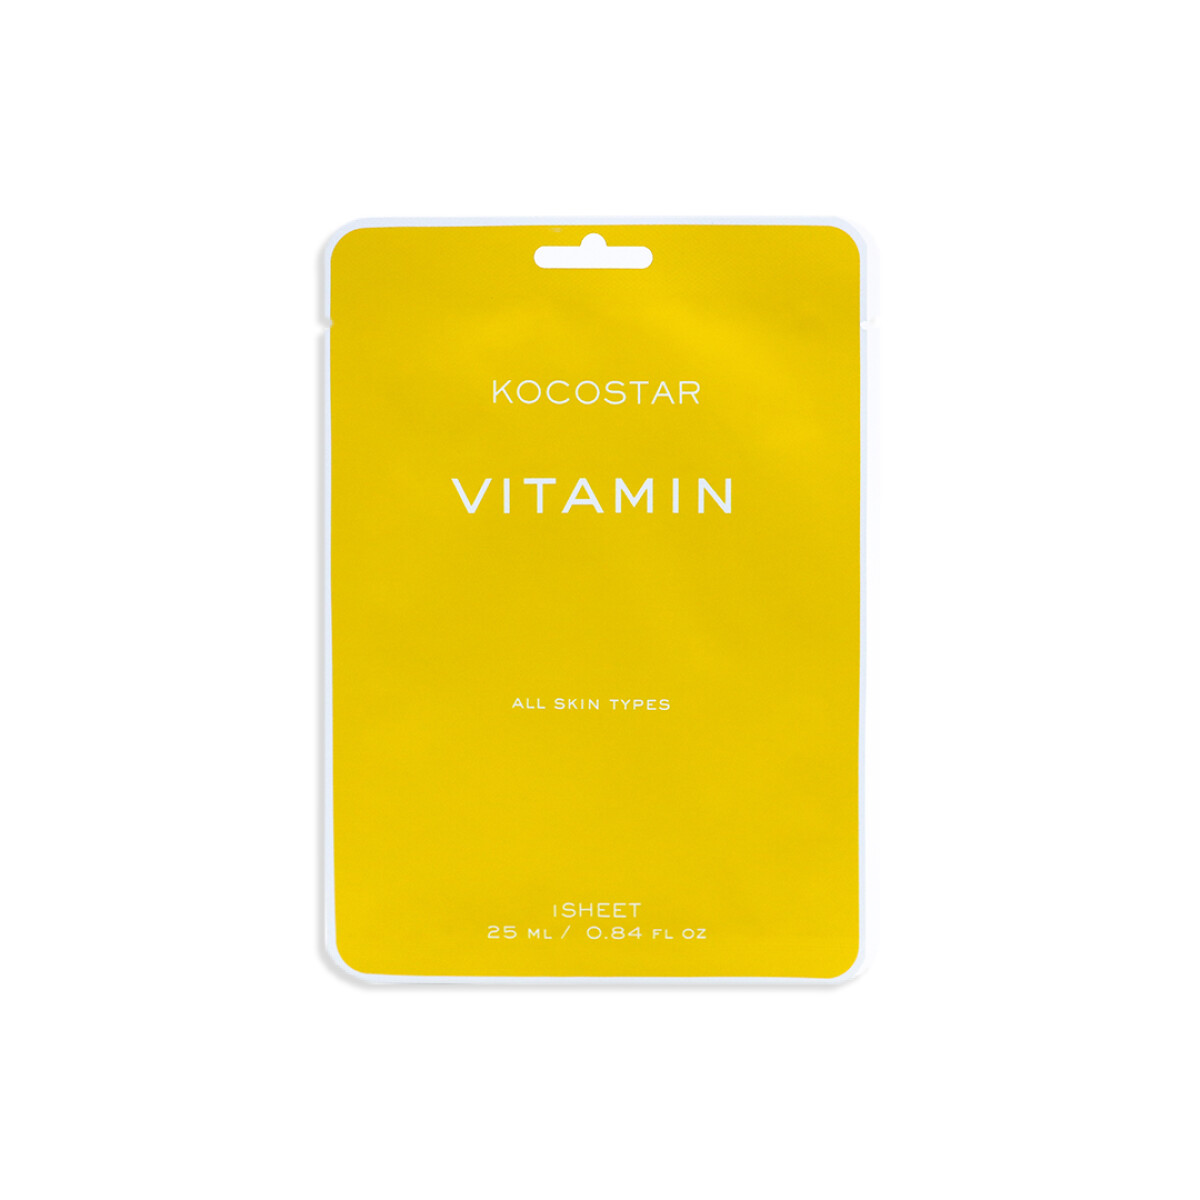 VITAMIN MASK - Mascarilla facial vegana con vitaminas. 